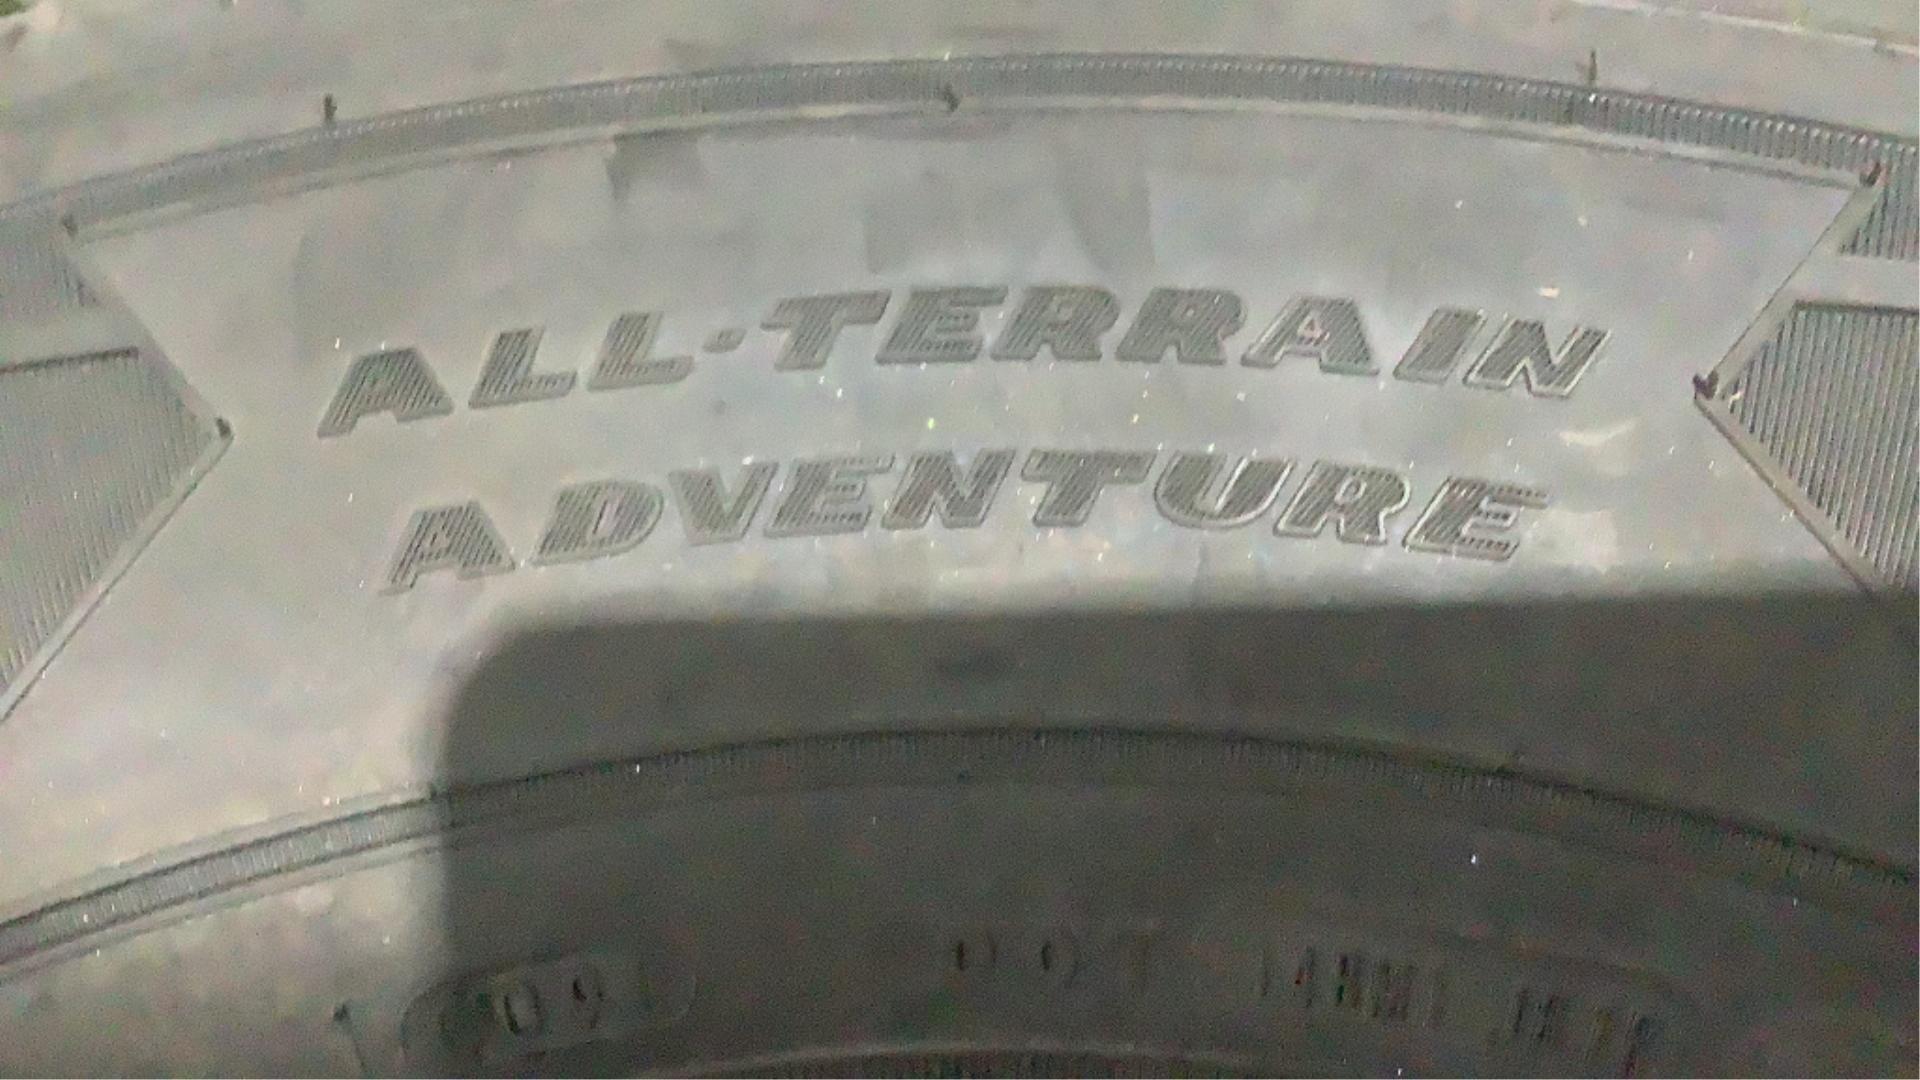 (4) Goodyear 245/75R17 Tires Wrangler All-Terrain